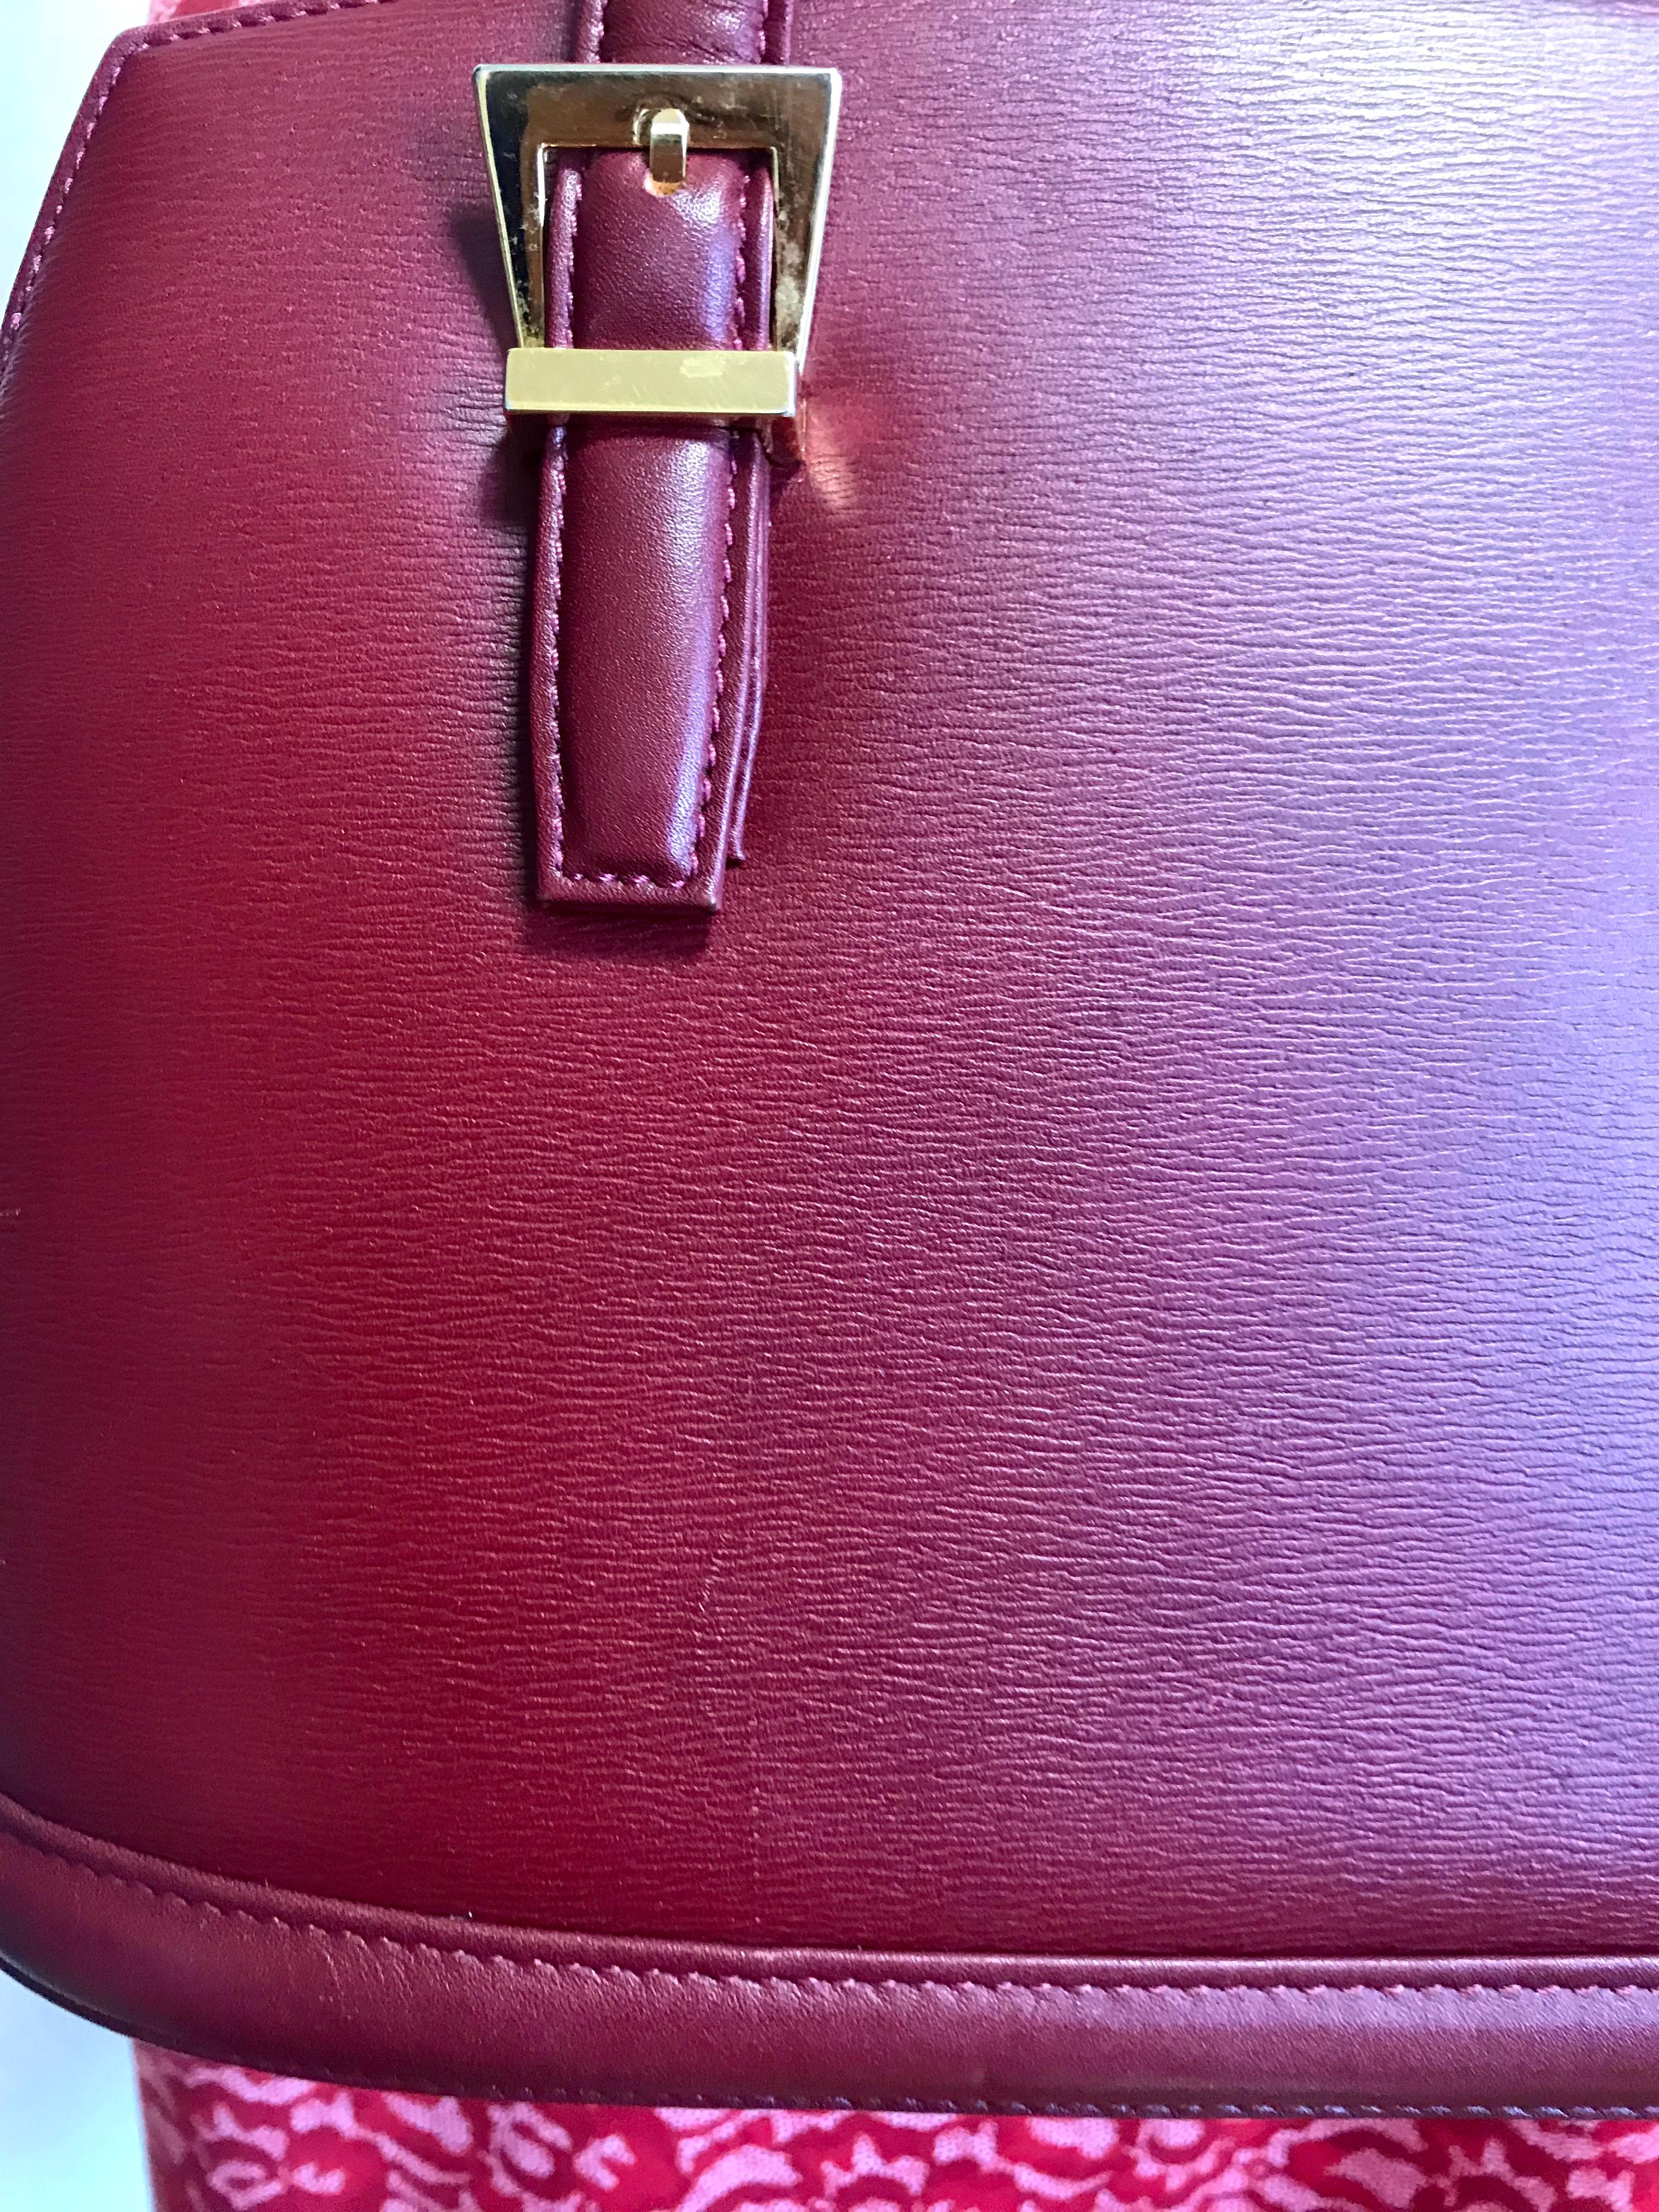 Vintage Valentino Garavani wine leather handbag with golden buckles. Classic bag For Sale 2